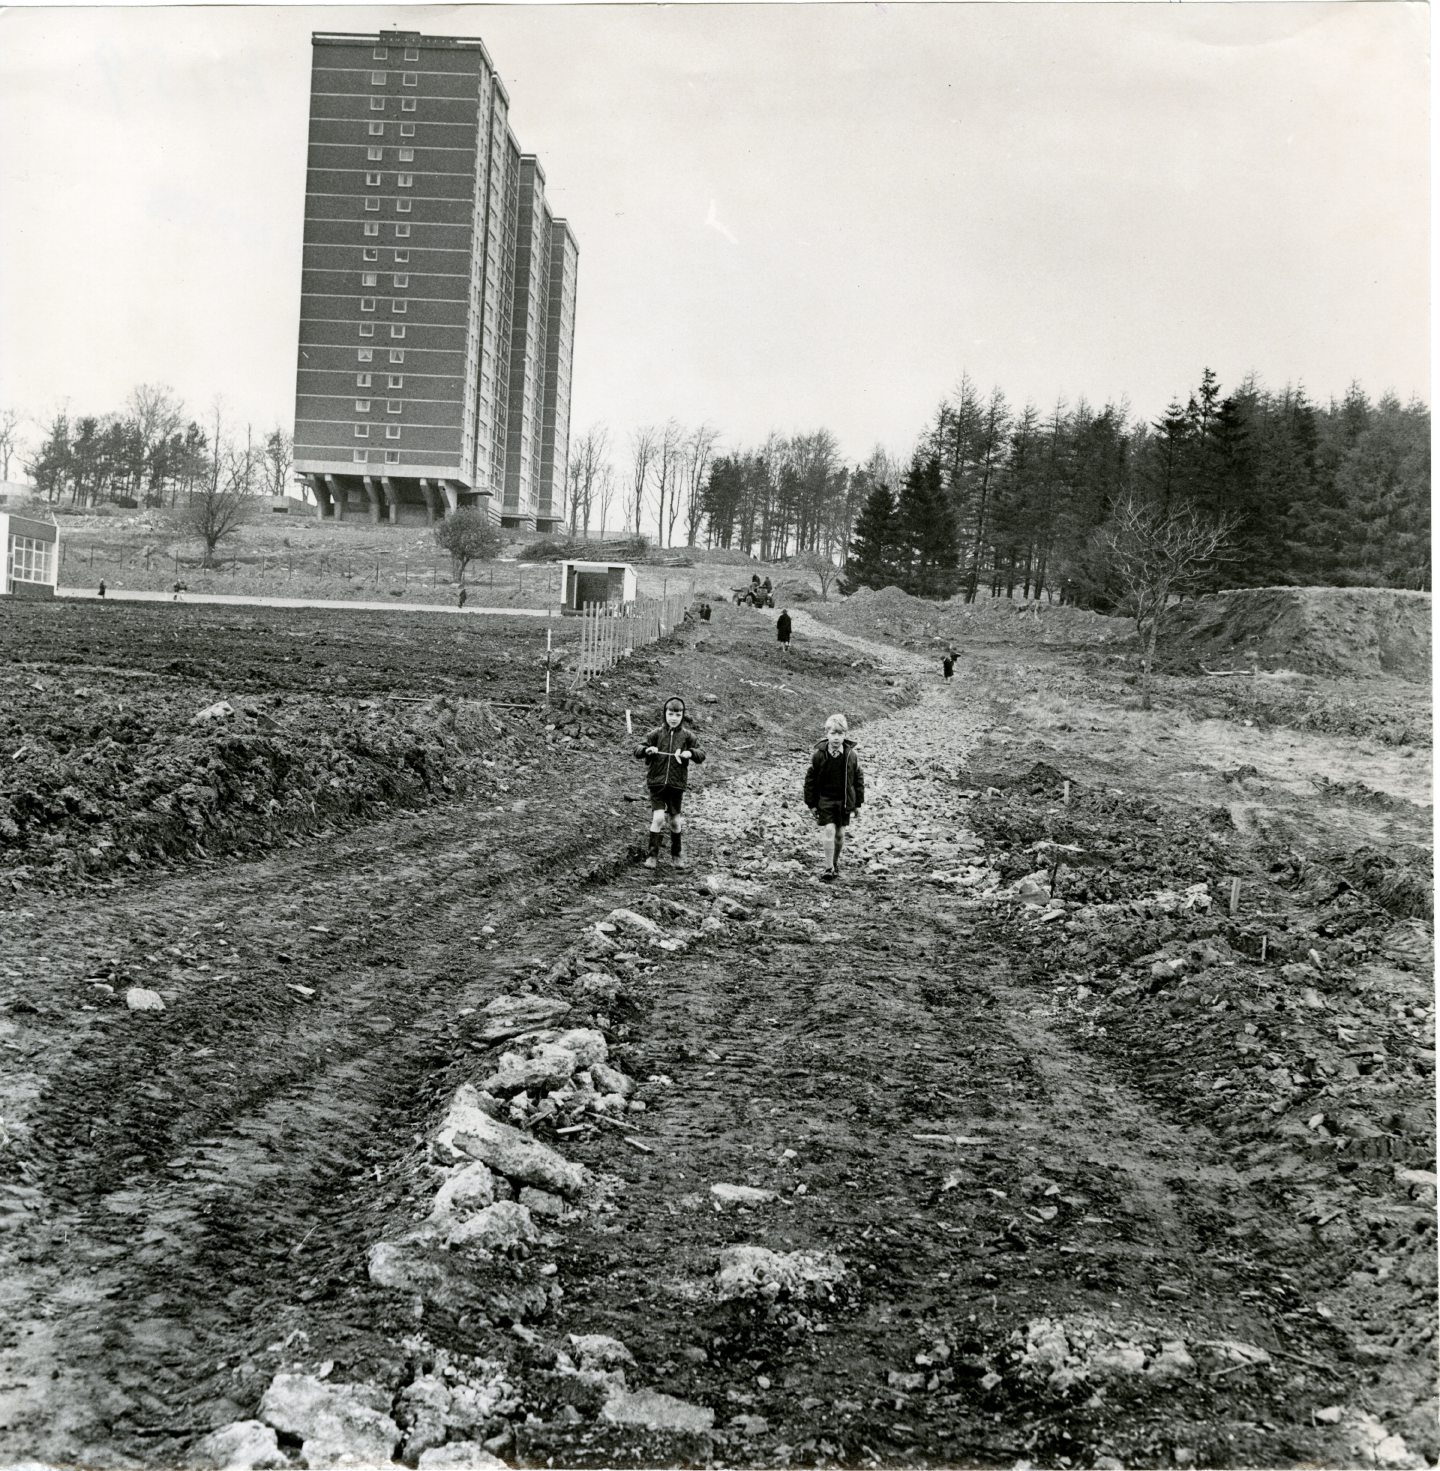 Children going to school past the Ardler multi-storey blocks in 1968.